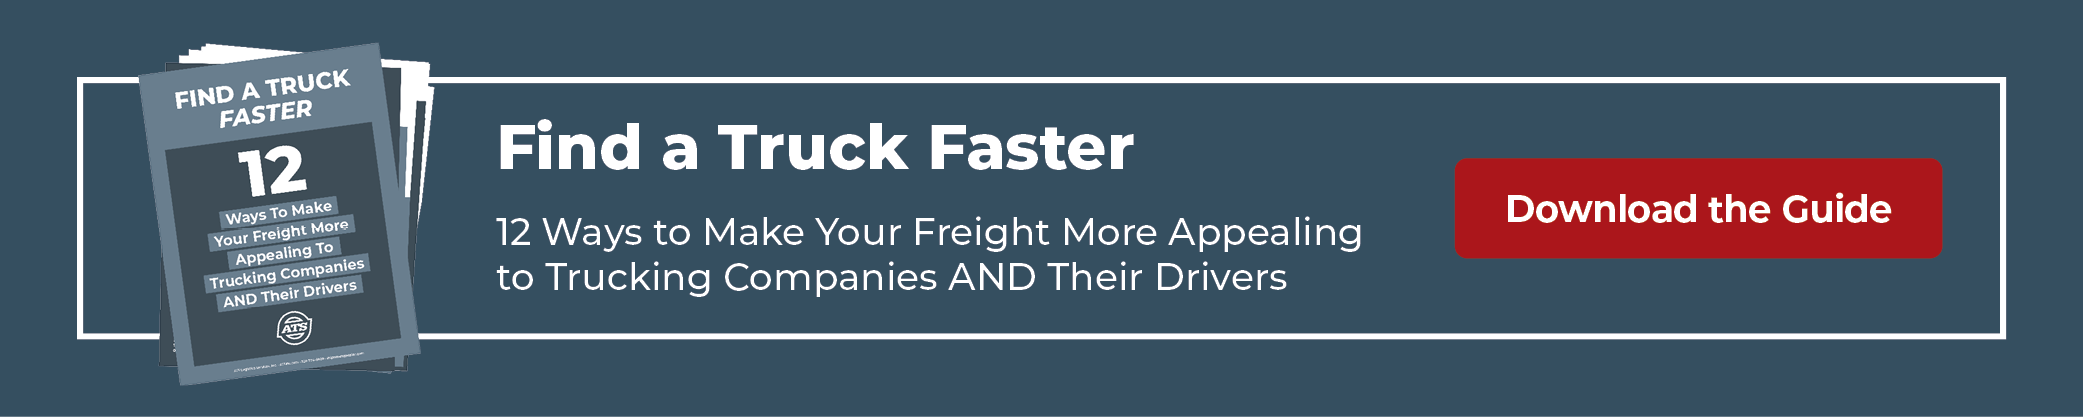 Find a Truck Faster CTA Blog